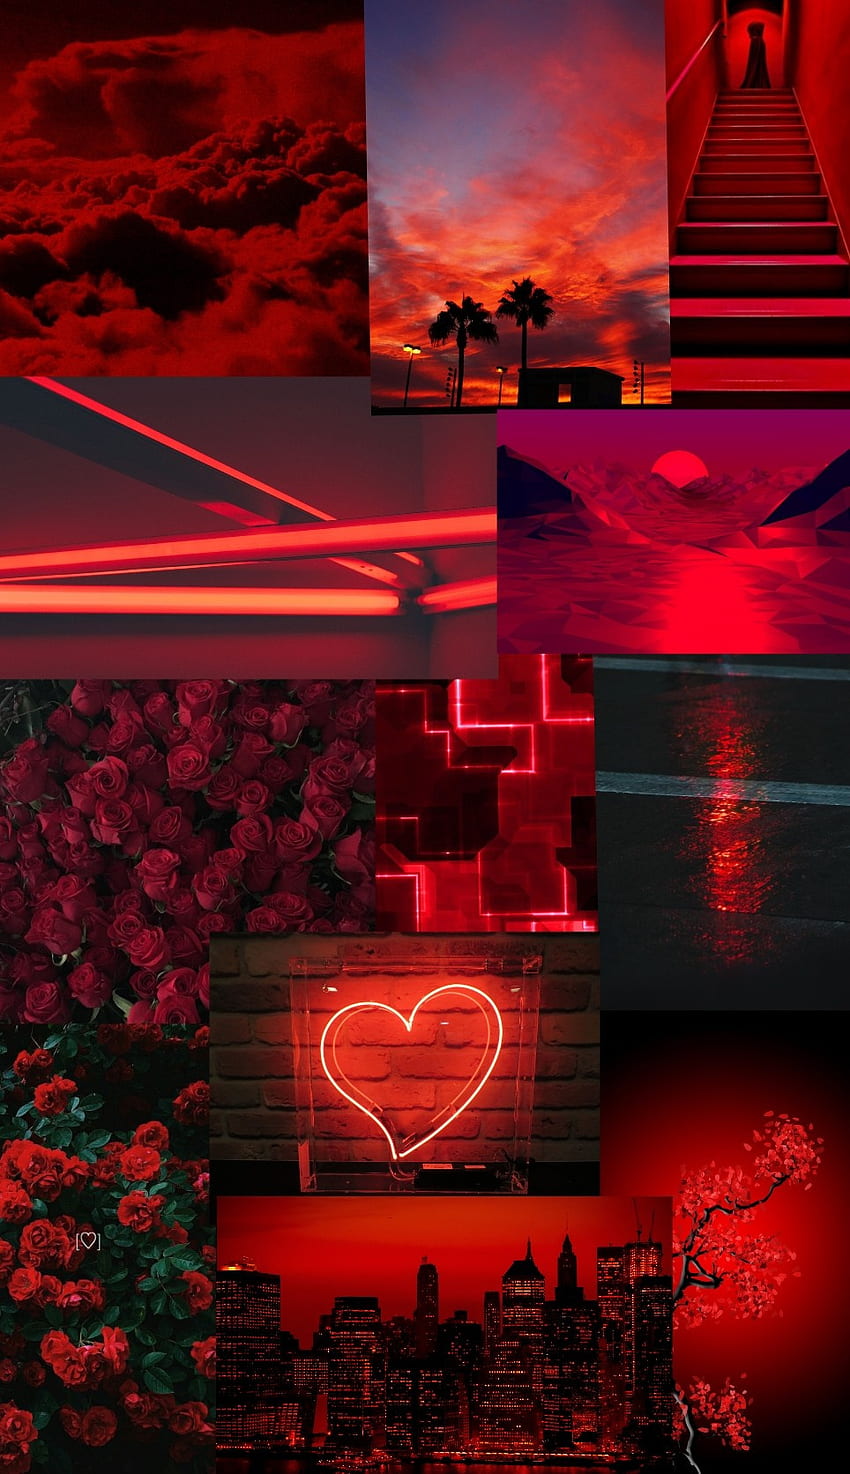 Neon Rose IPhone Wallpaper - IPhone Wallpapers : iPhone Wallpapers  Iphone  wallpaper images, Iphone wallpaper, Heart iphone wallpaper